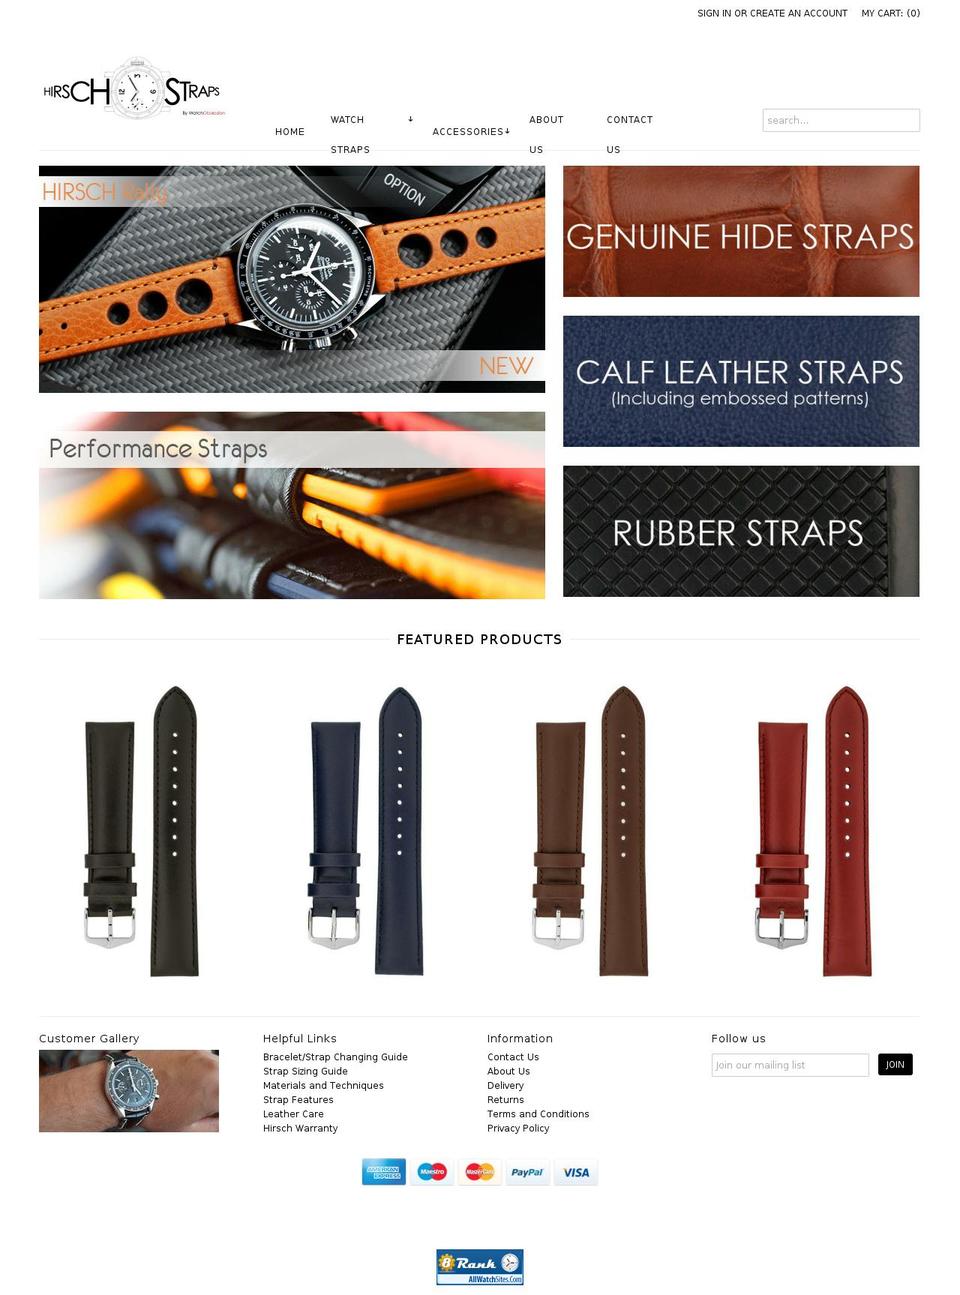 hirschstraps.com shopify website screenshot